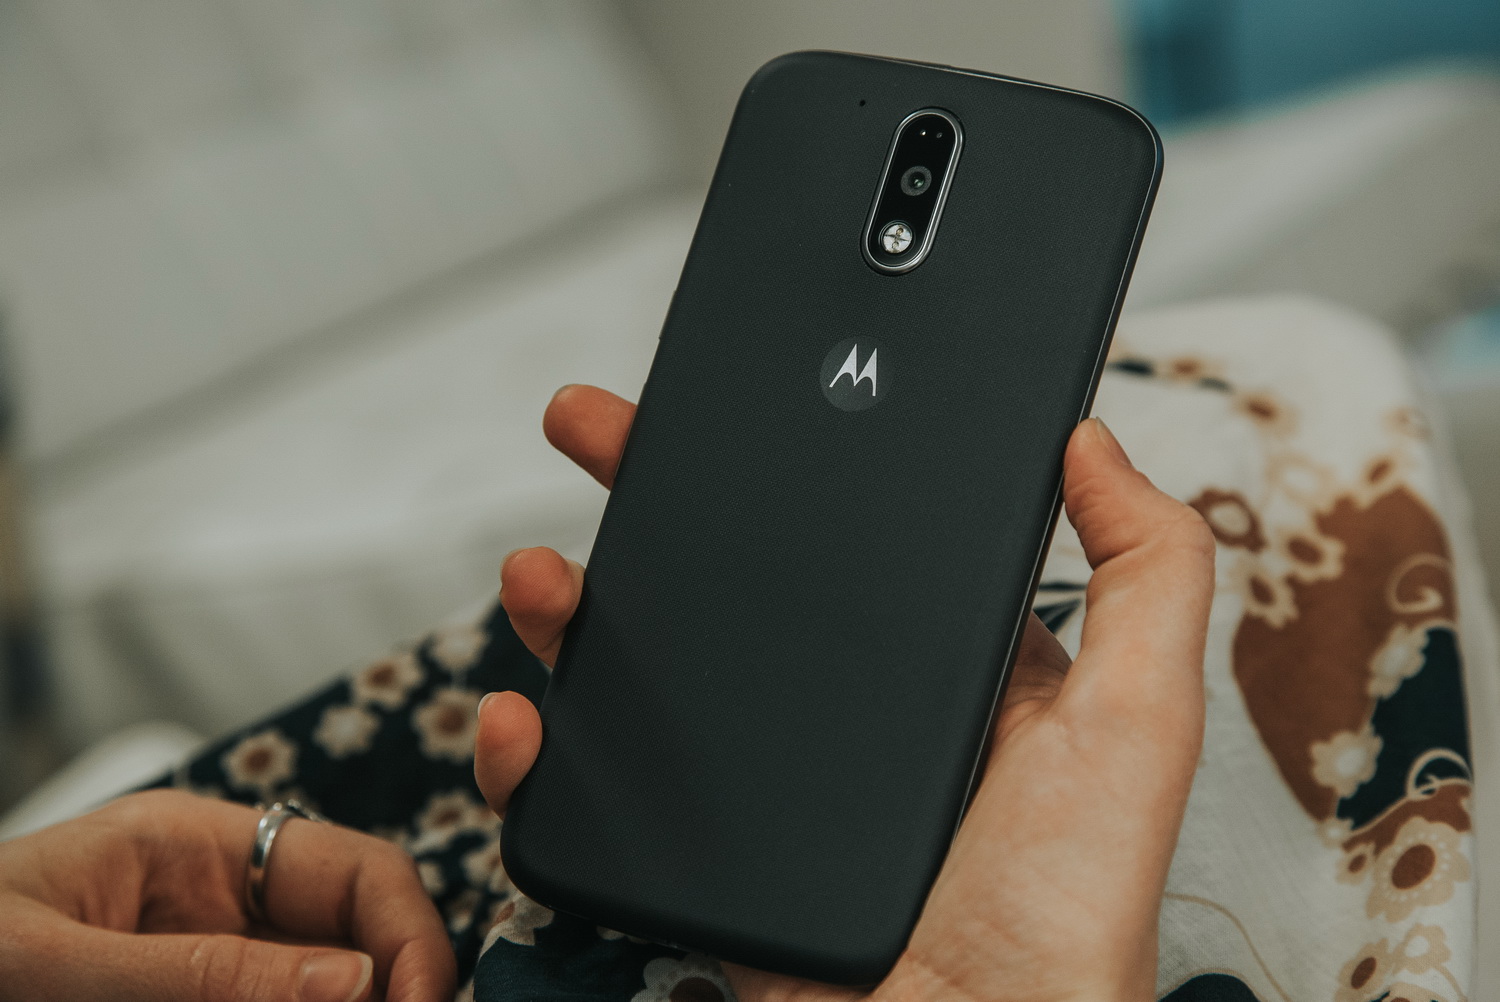 Motorola Moto G4 Play 16GB, Unlocked Smartphone - Black for sale online